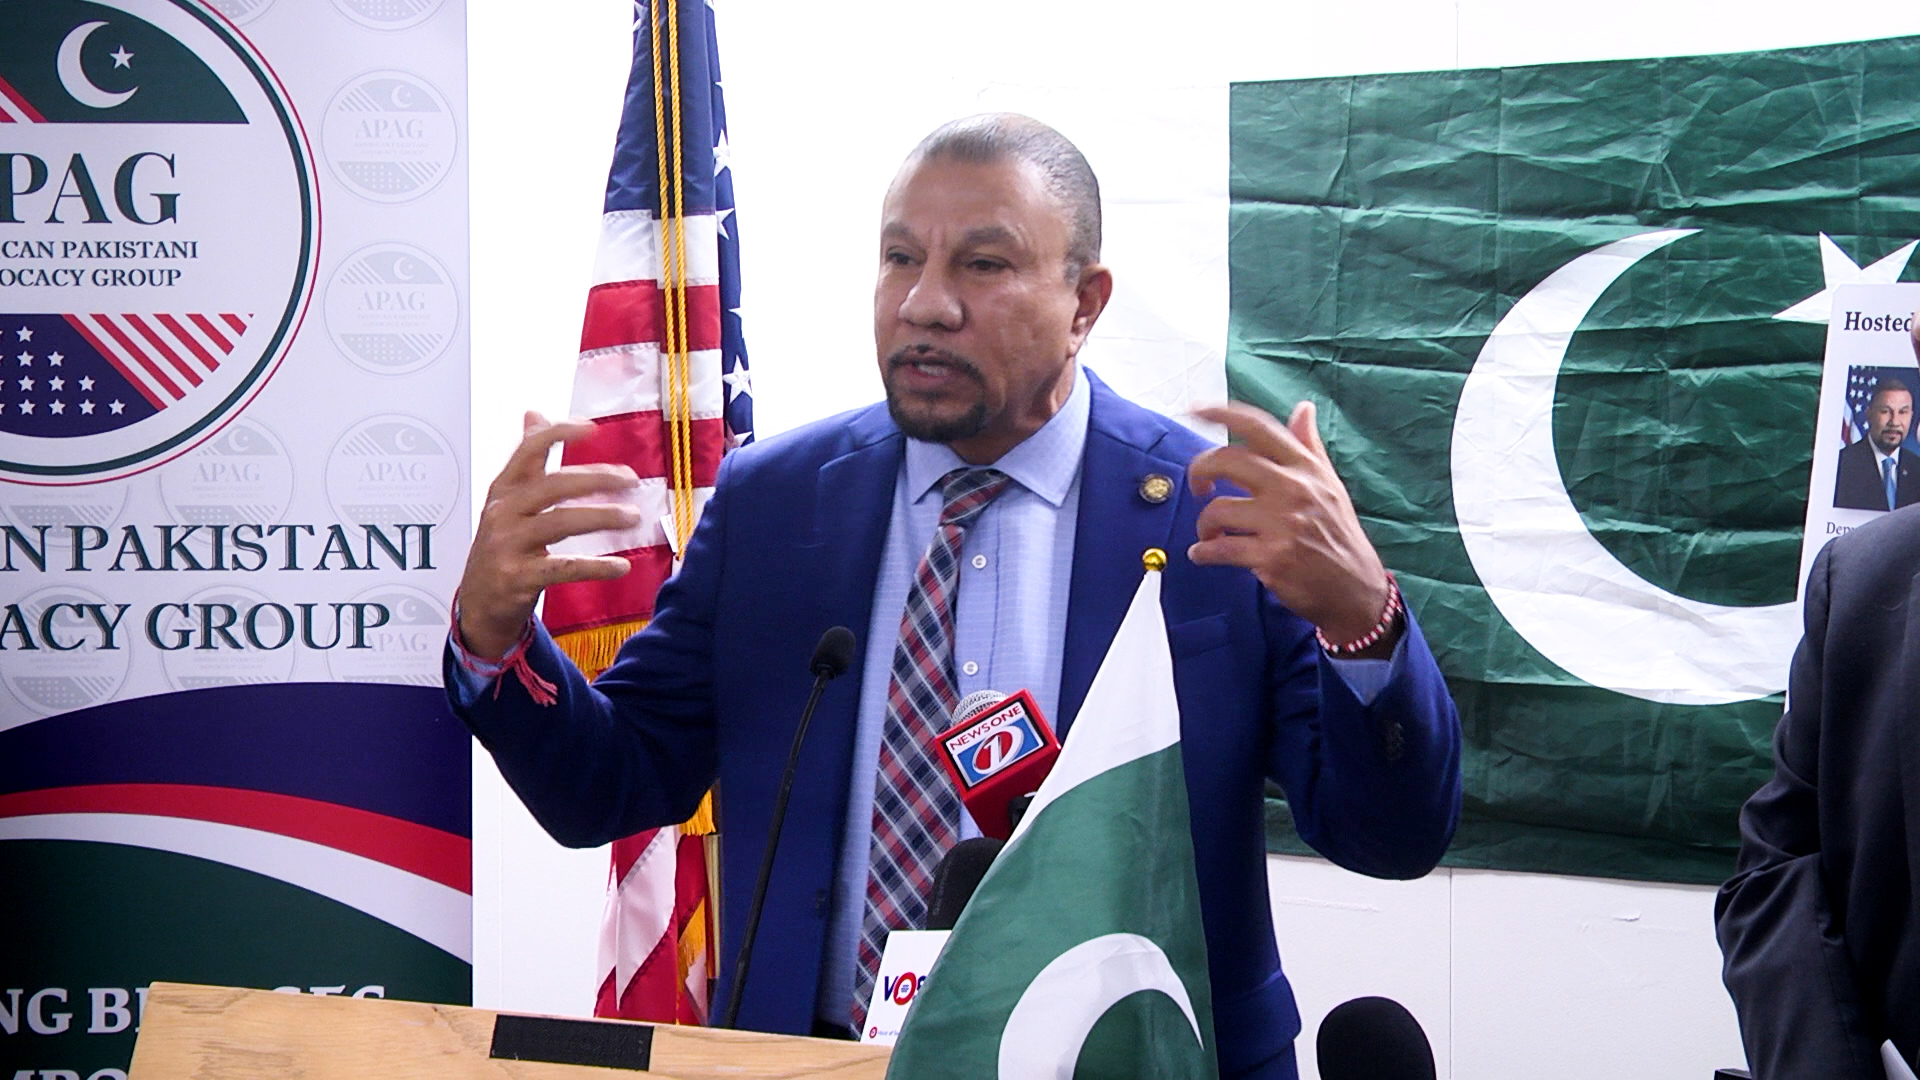 Celebrating Pakistan-American Heritage Day in Albany